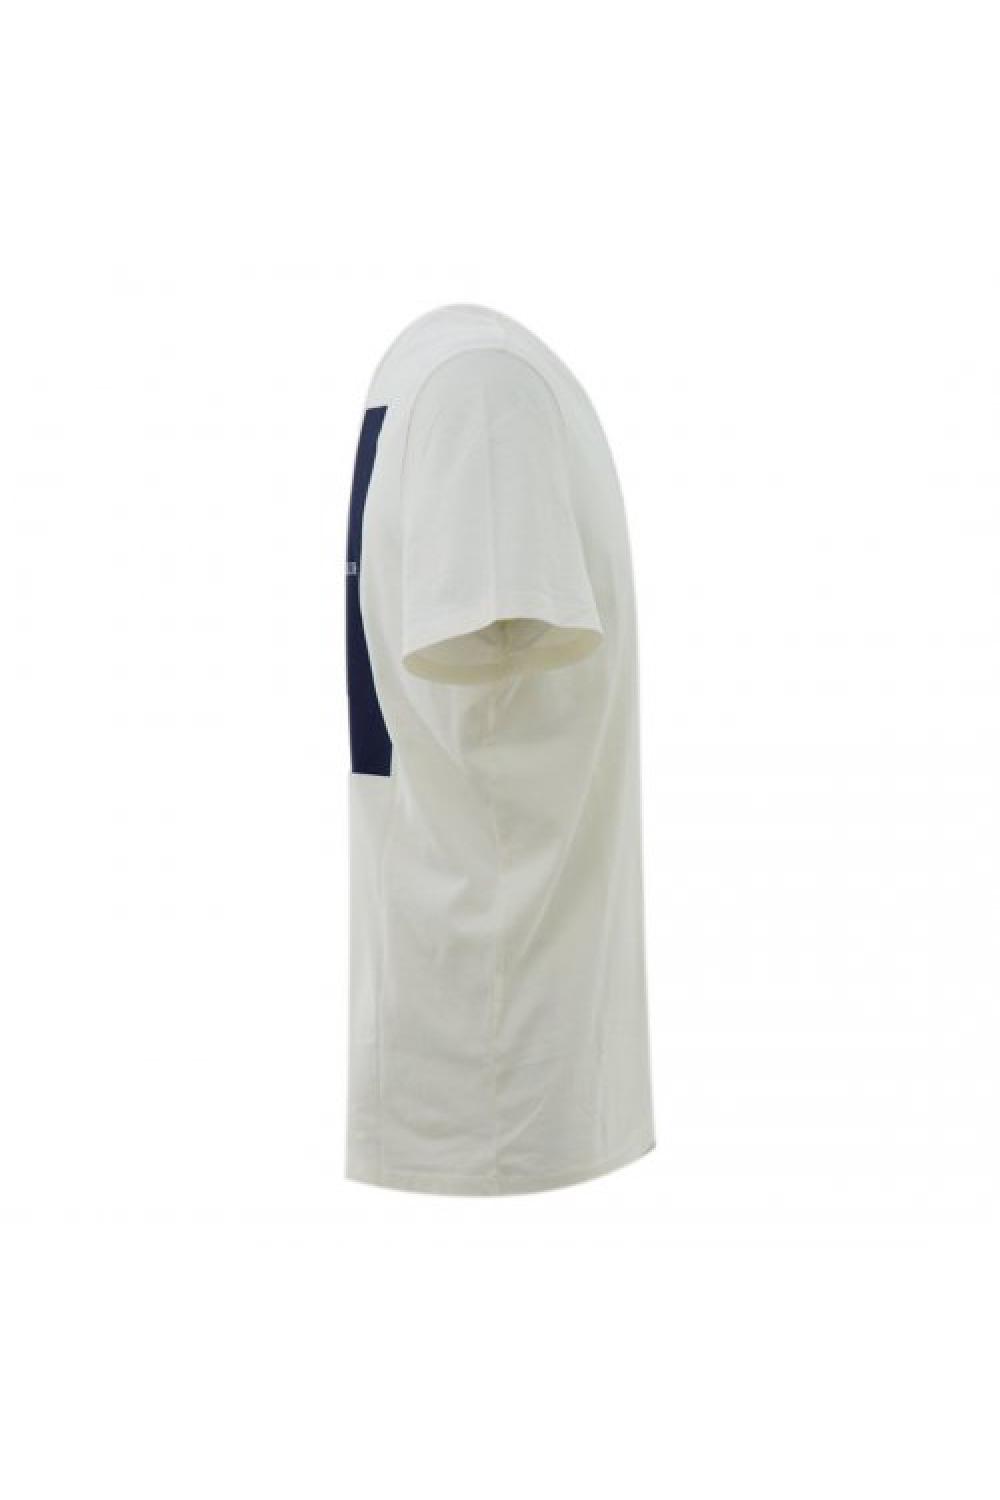 STAFF T-shirt Rex Men - Off White (64-007.047-N0024)